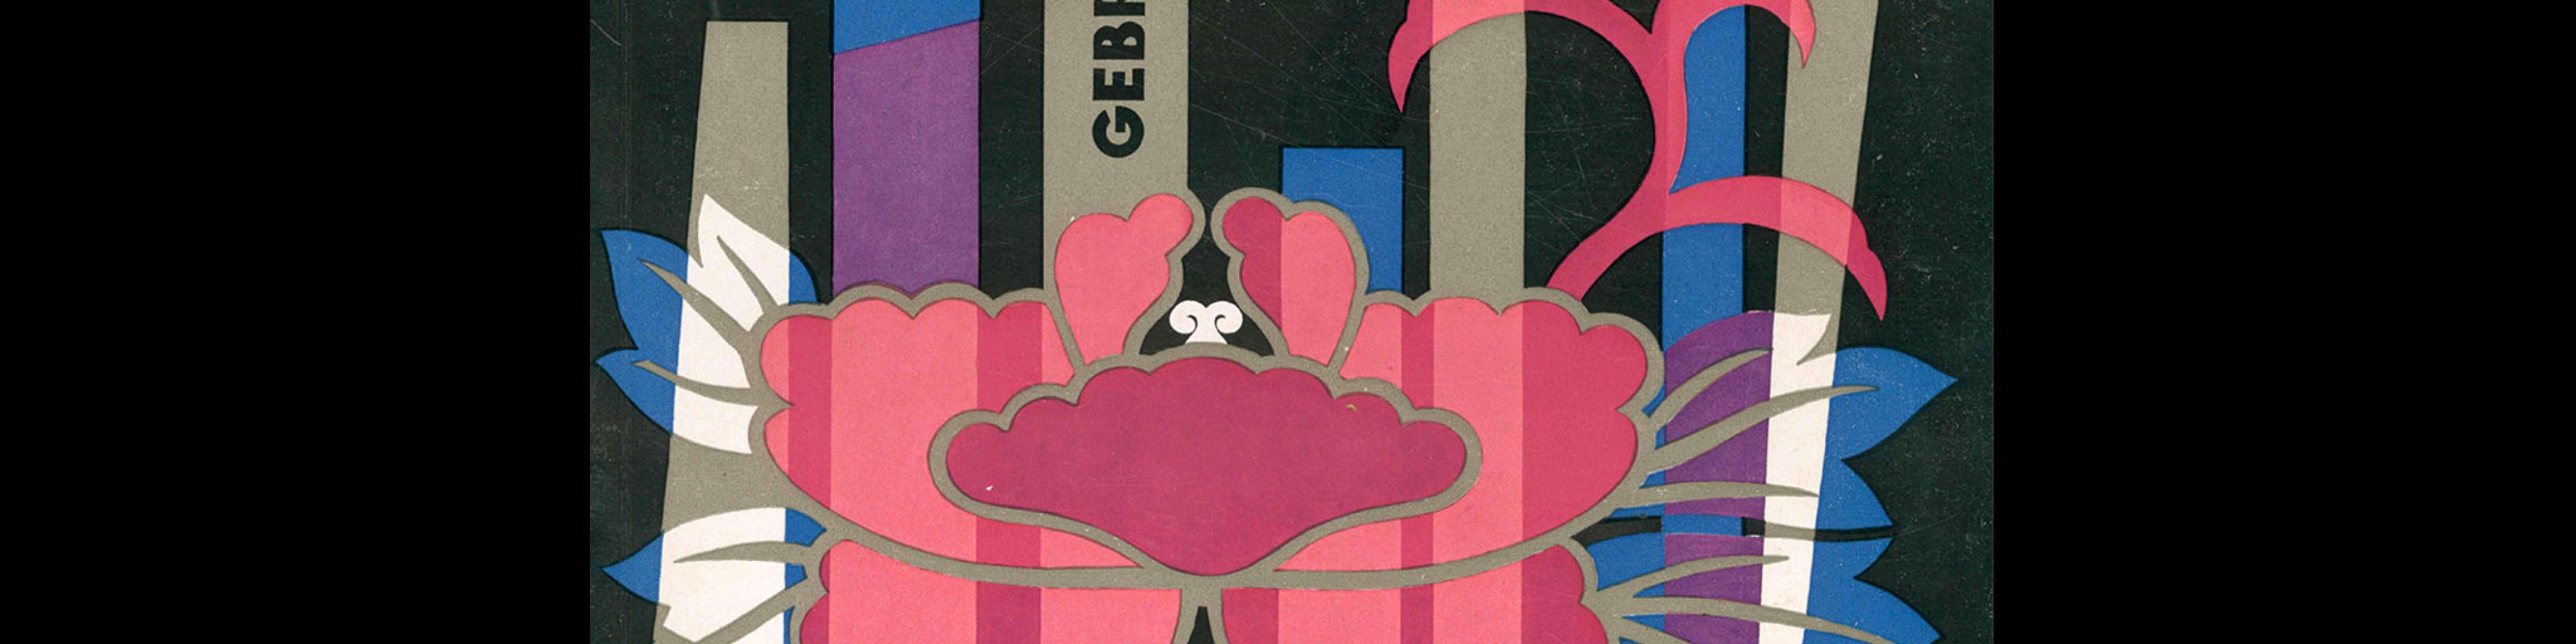 Gebrauchsgraphik, 10, 1955. Cover design by Hiroshi Ohchi